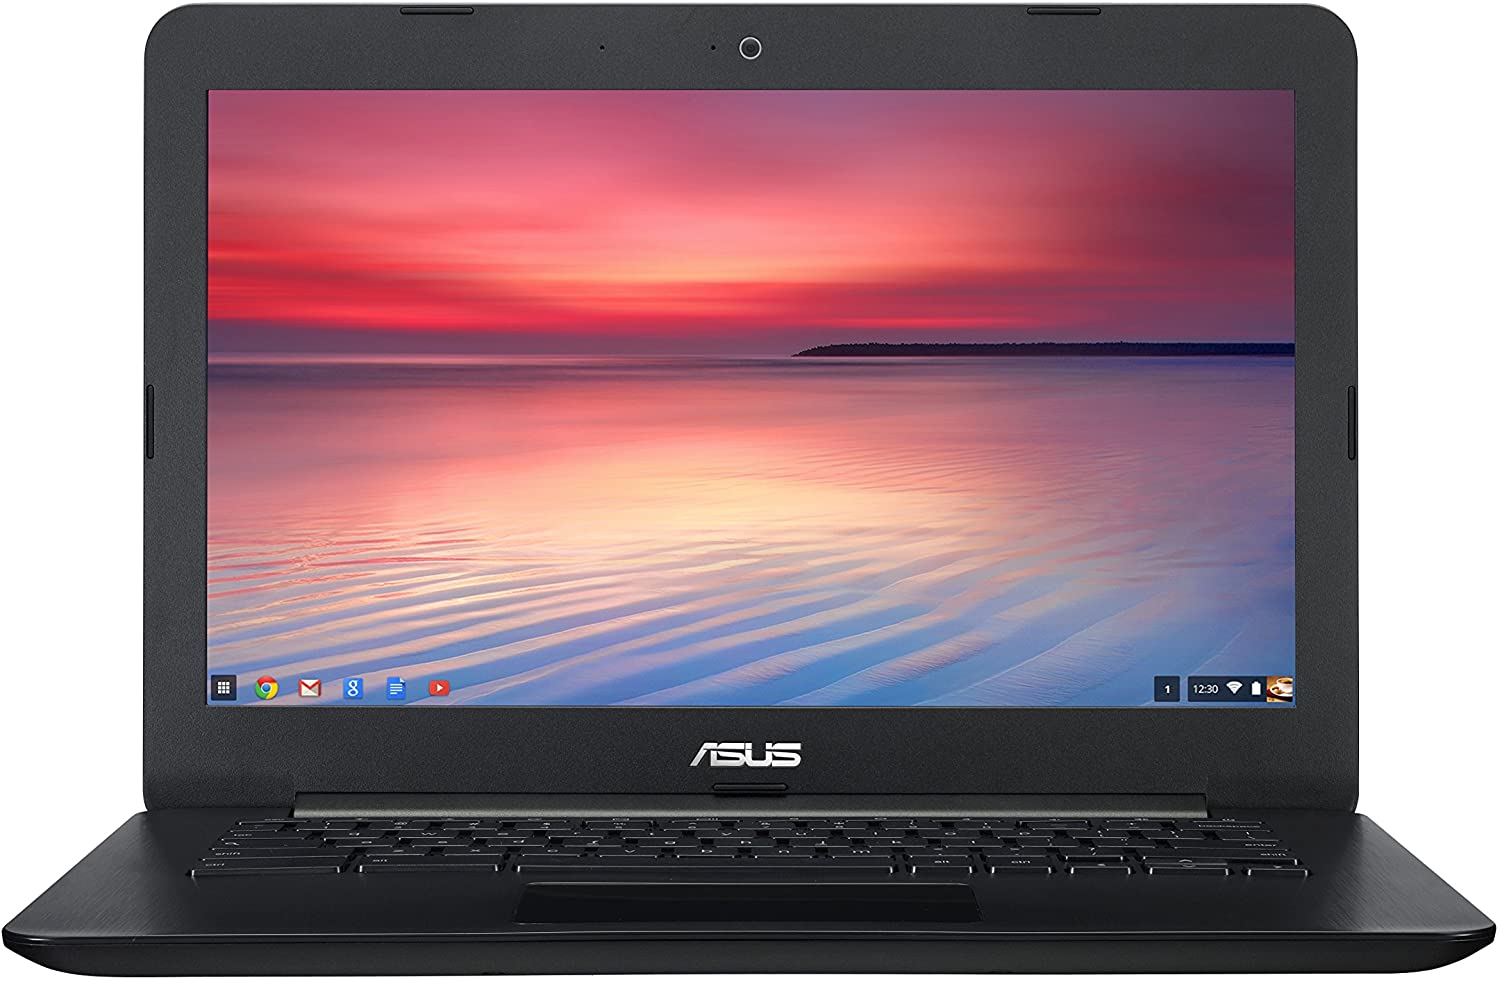 Asus Chromebook C300MA - Under $200